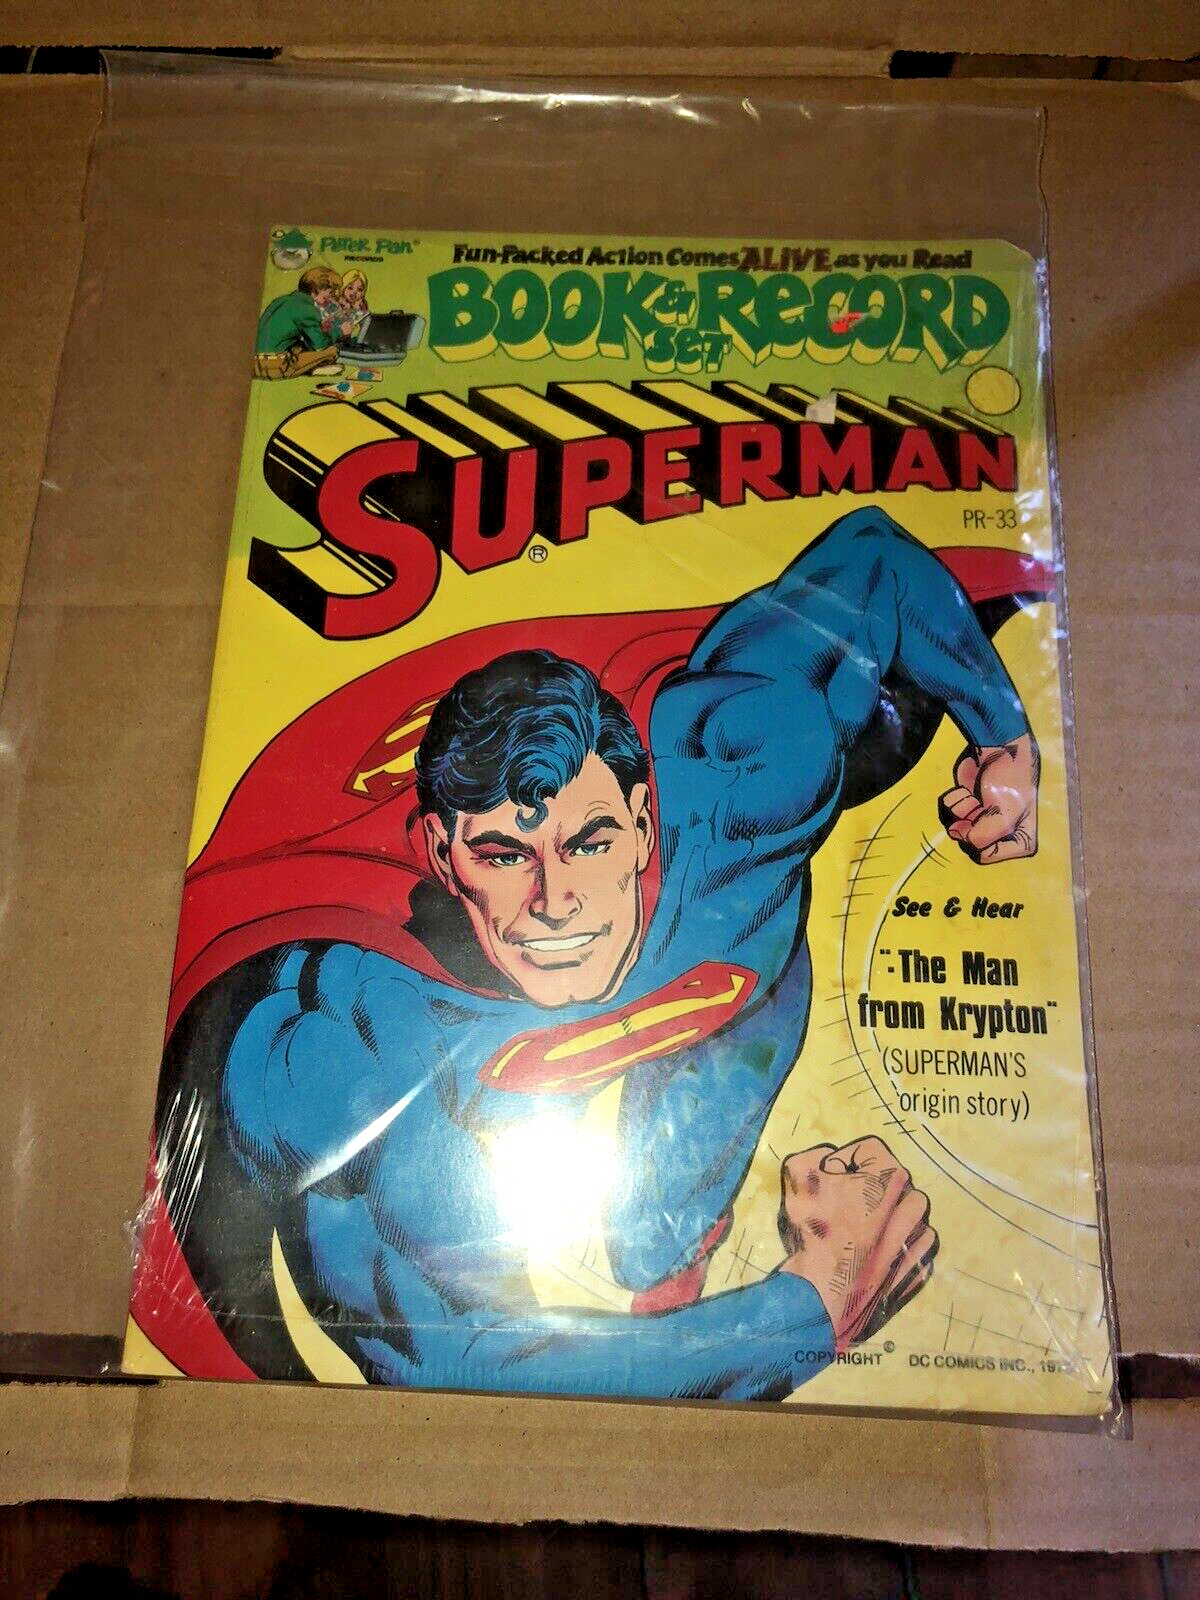 RARE SEALED SUPERMAN MAN FROM KRYPTON ORIGIN STORY BOOK RECORD SET PR33 1978